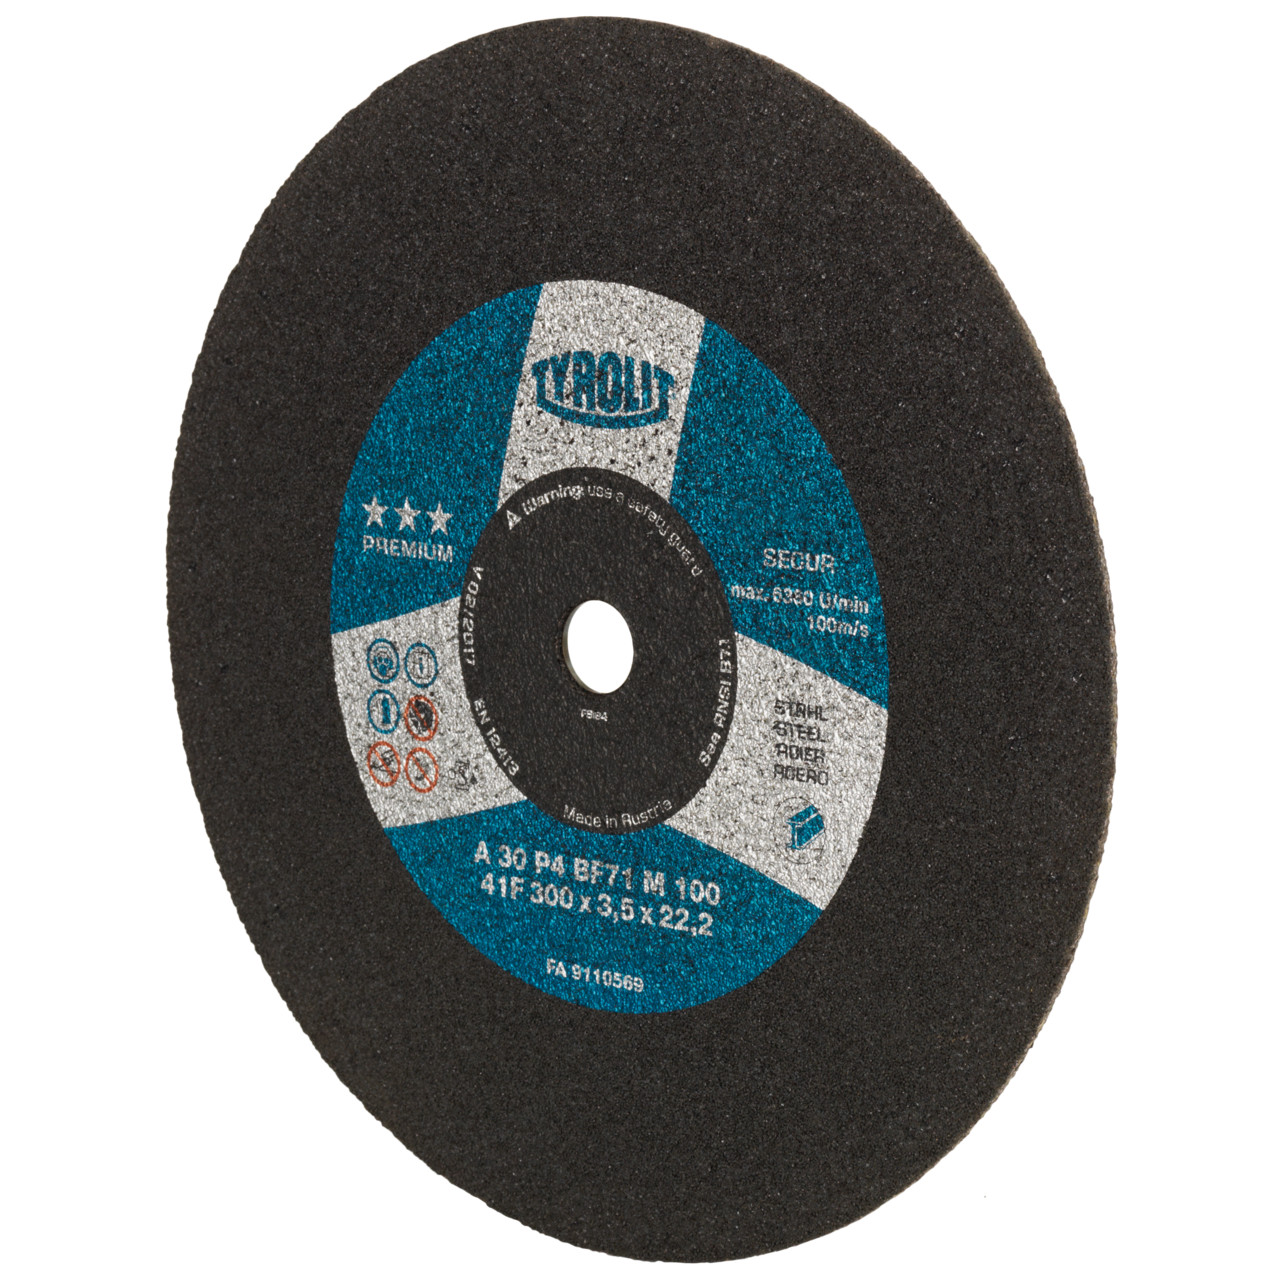 Tyrolit Cutting discs DxDxH 500x5.5x40 For steel, shape: 41 - straight version, Art. 514338